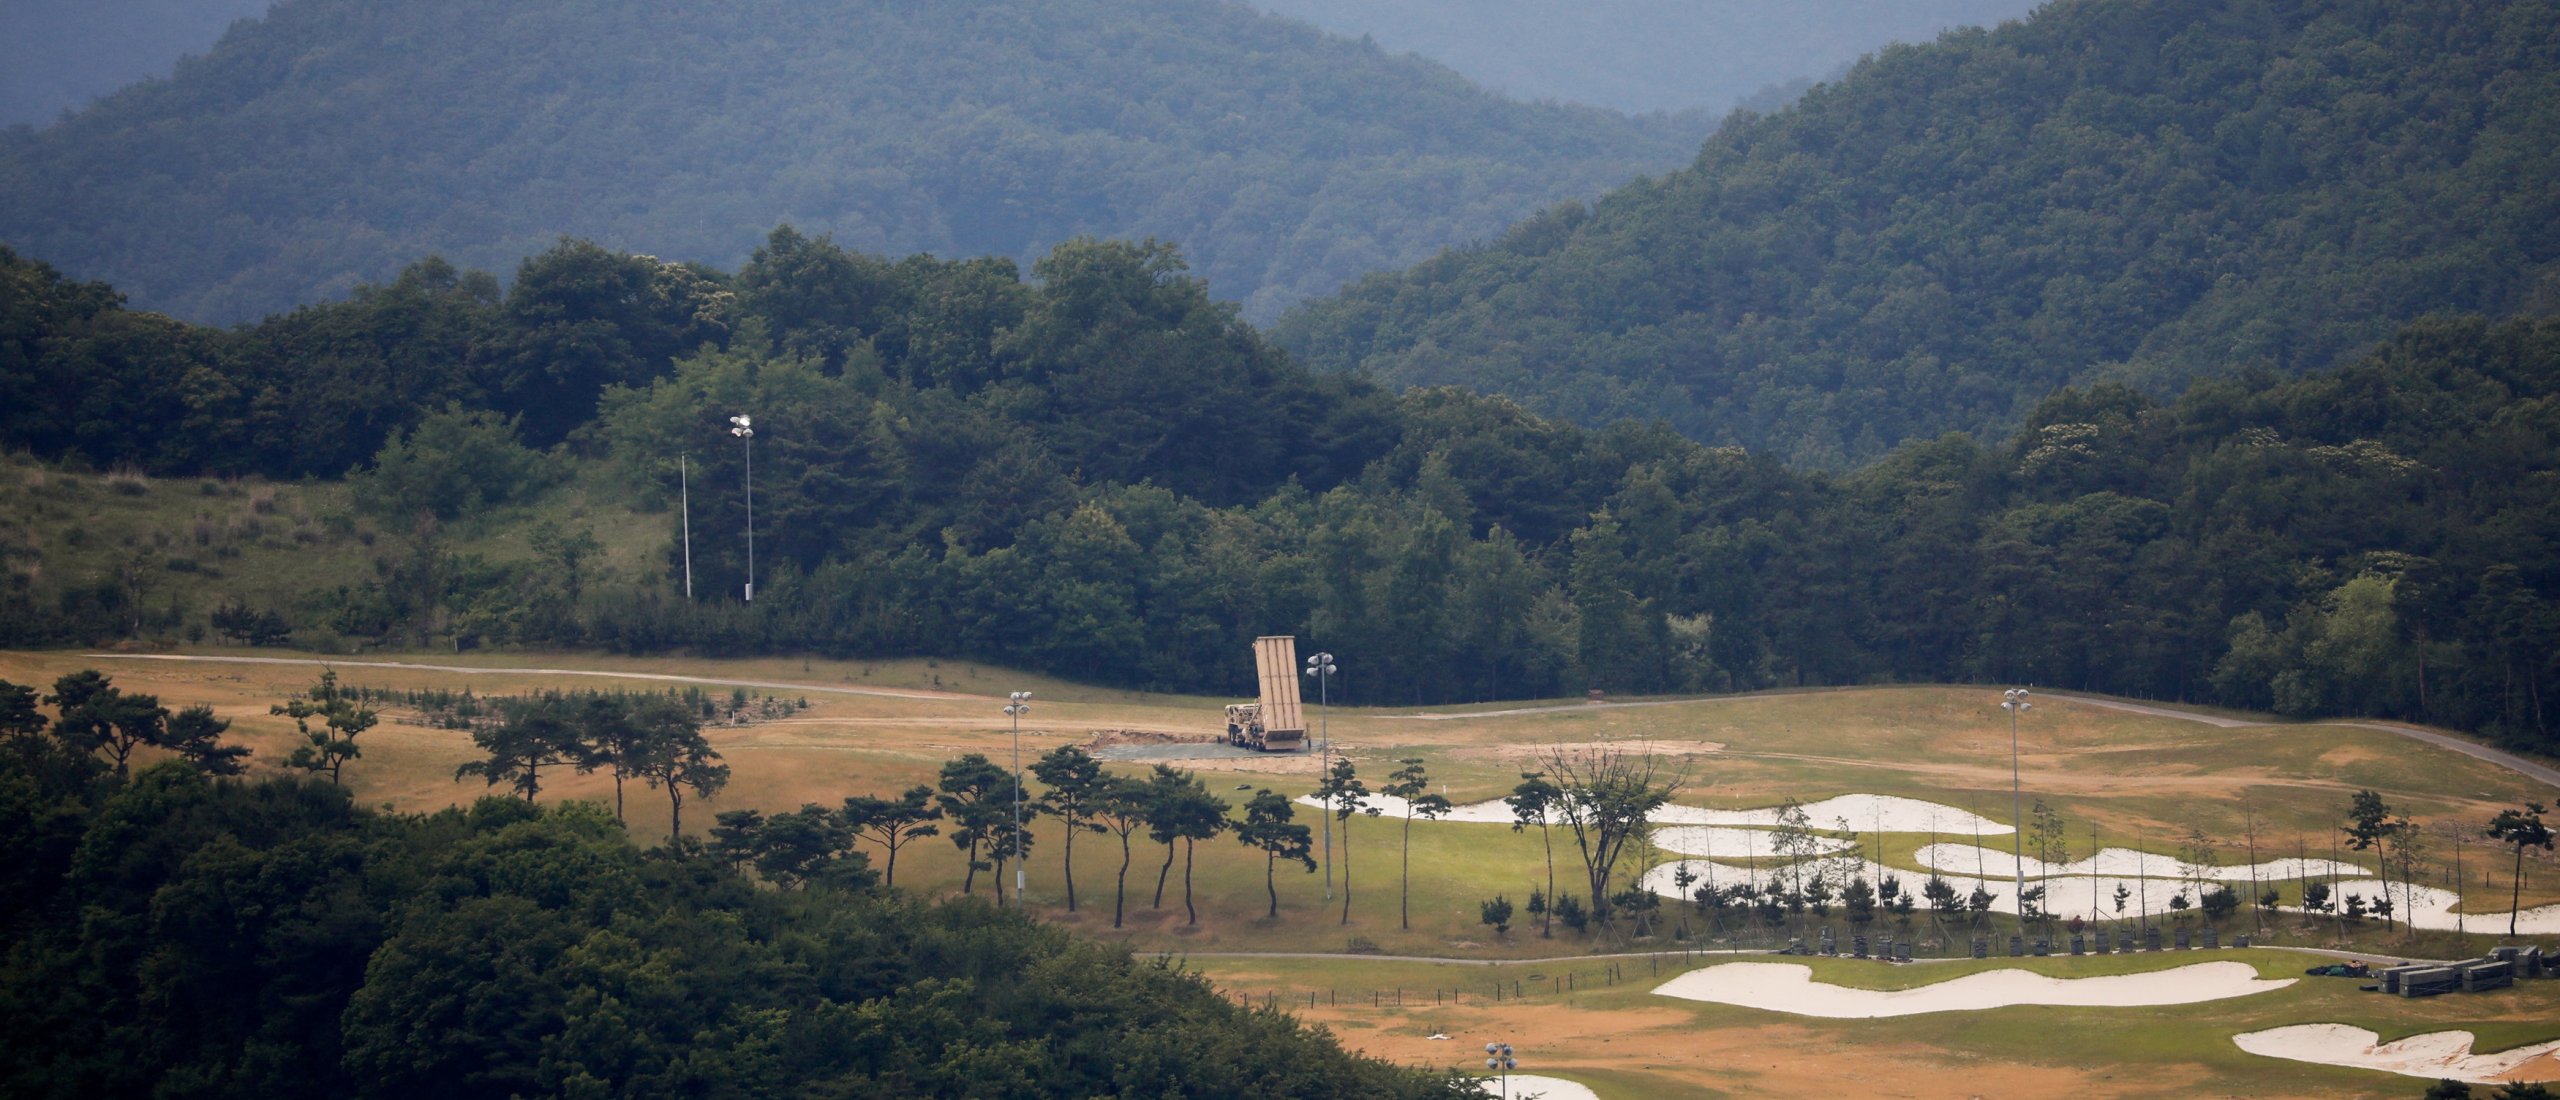  A Terminal High Altitude Area Defense (THAAD) interceptor is seen in Seongju, South Korea, June 13, 2017. (Reuters Photo)